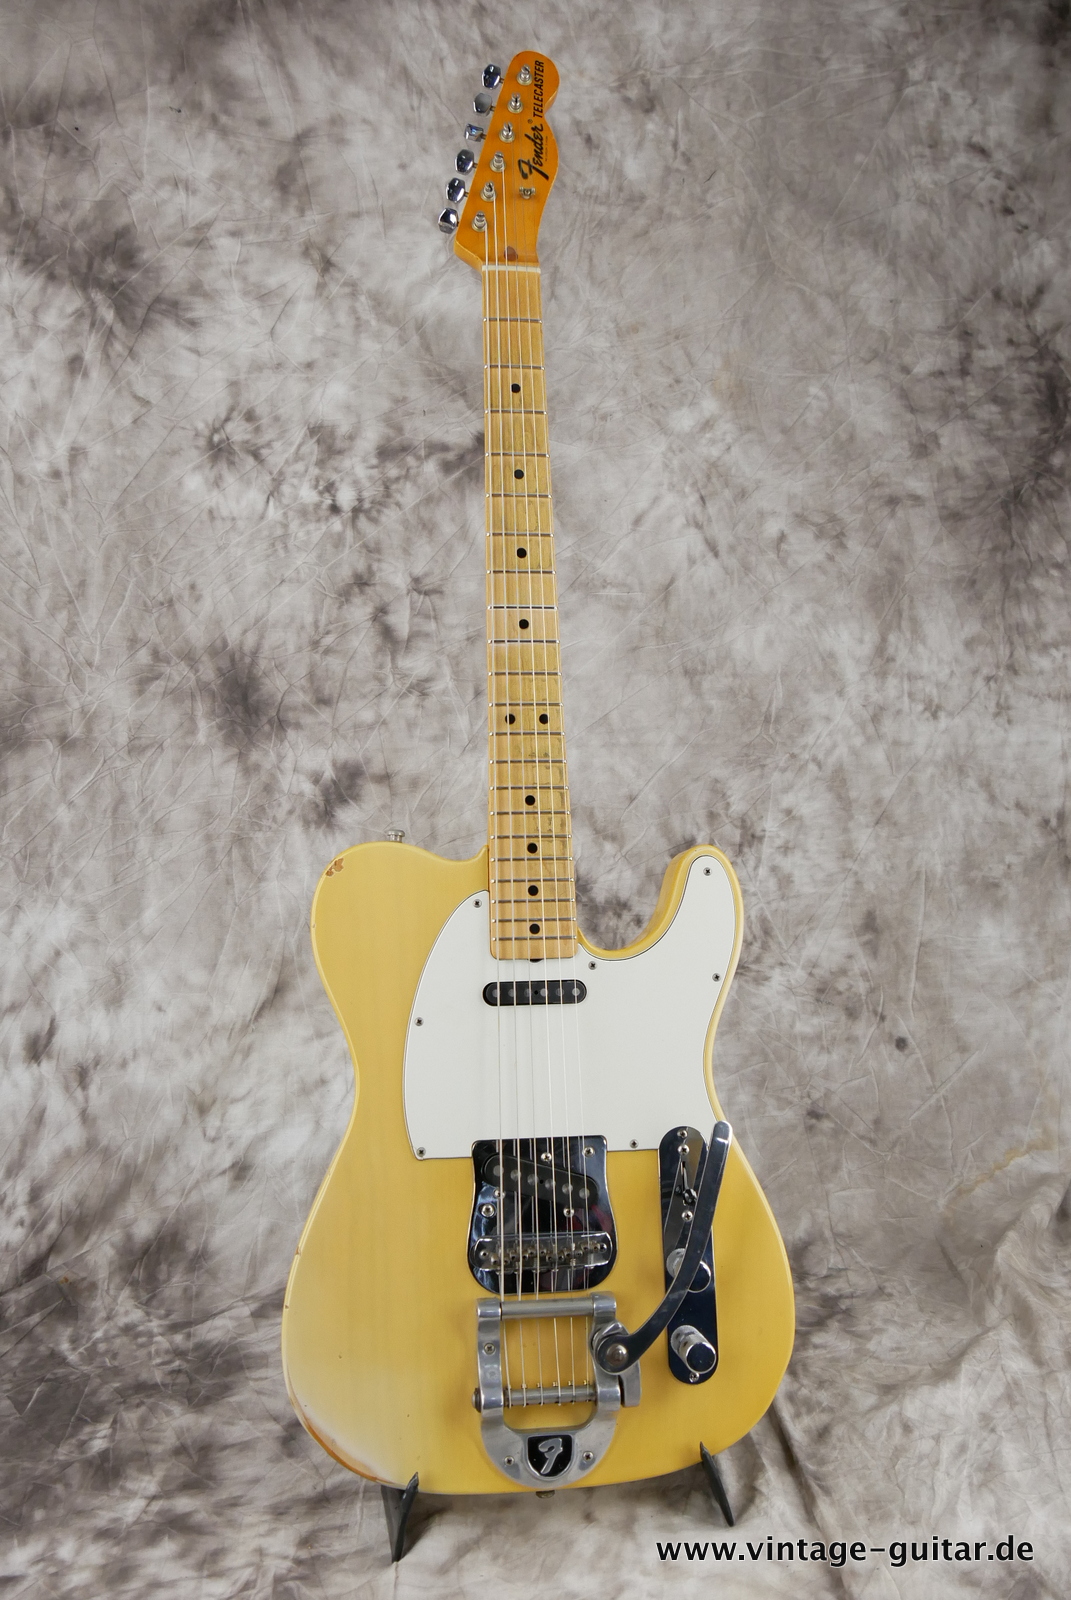 Fender_Telecaster_Bigsby_5_way_switch_1973_blonde_4,2kg-001.JPG